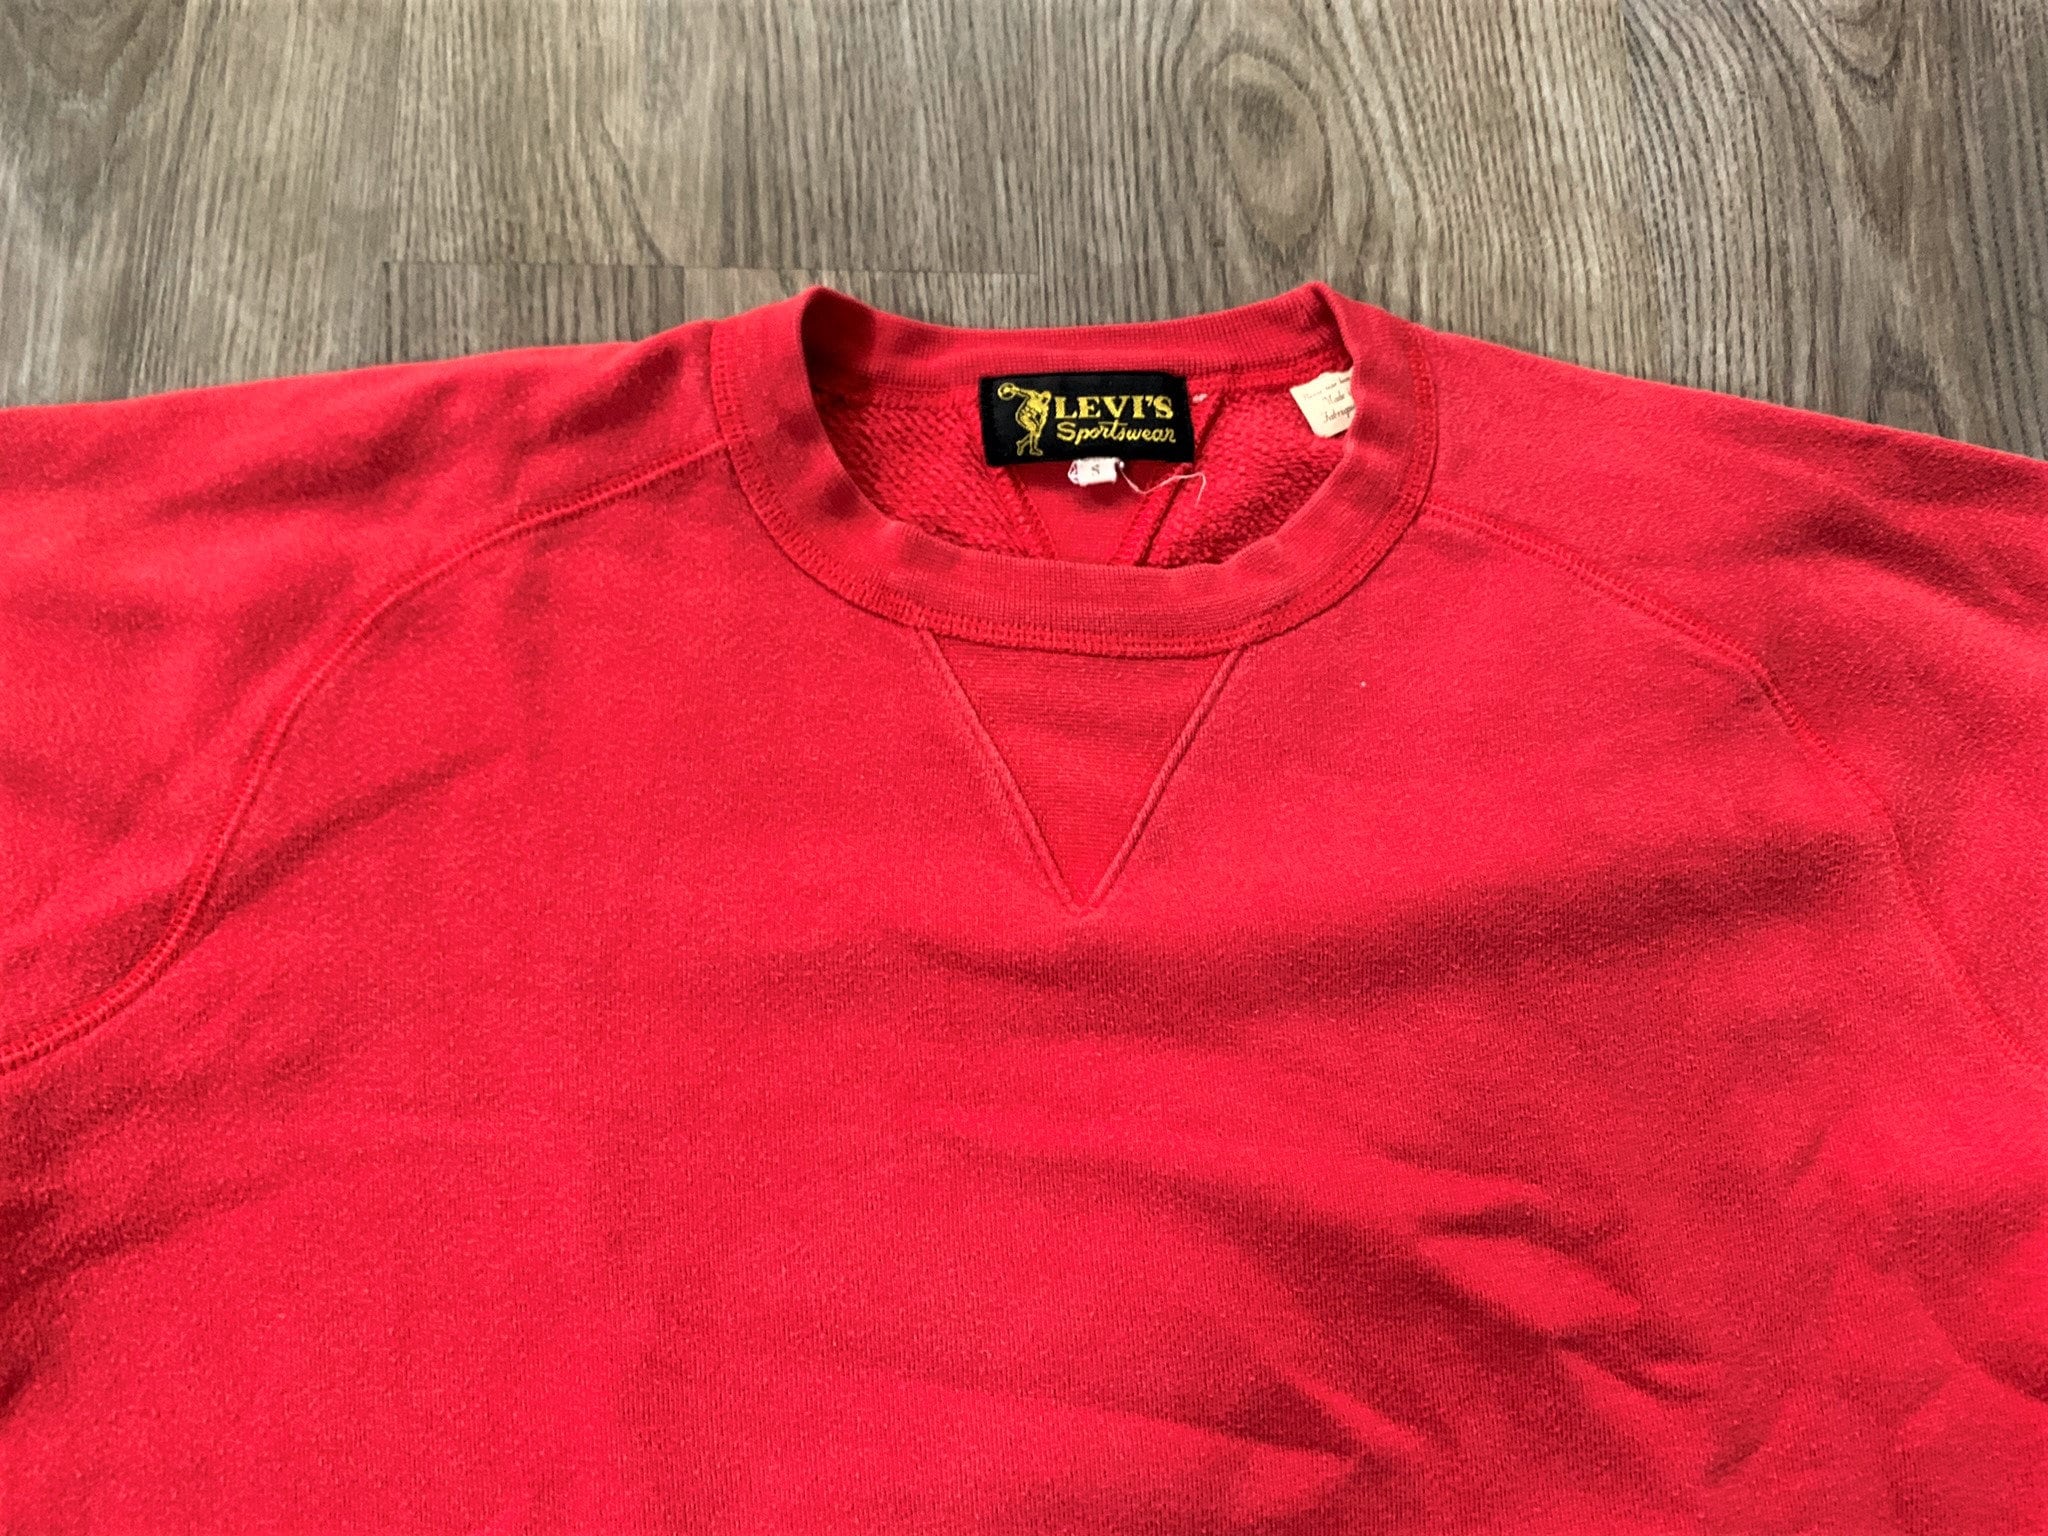 Levis Vintage Clothing Red Crewneck Sweatshirt Small - Etsy Ireland